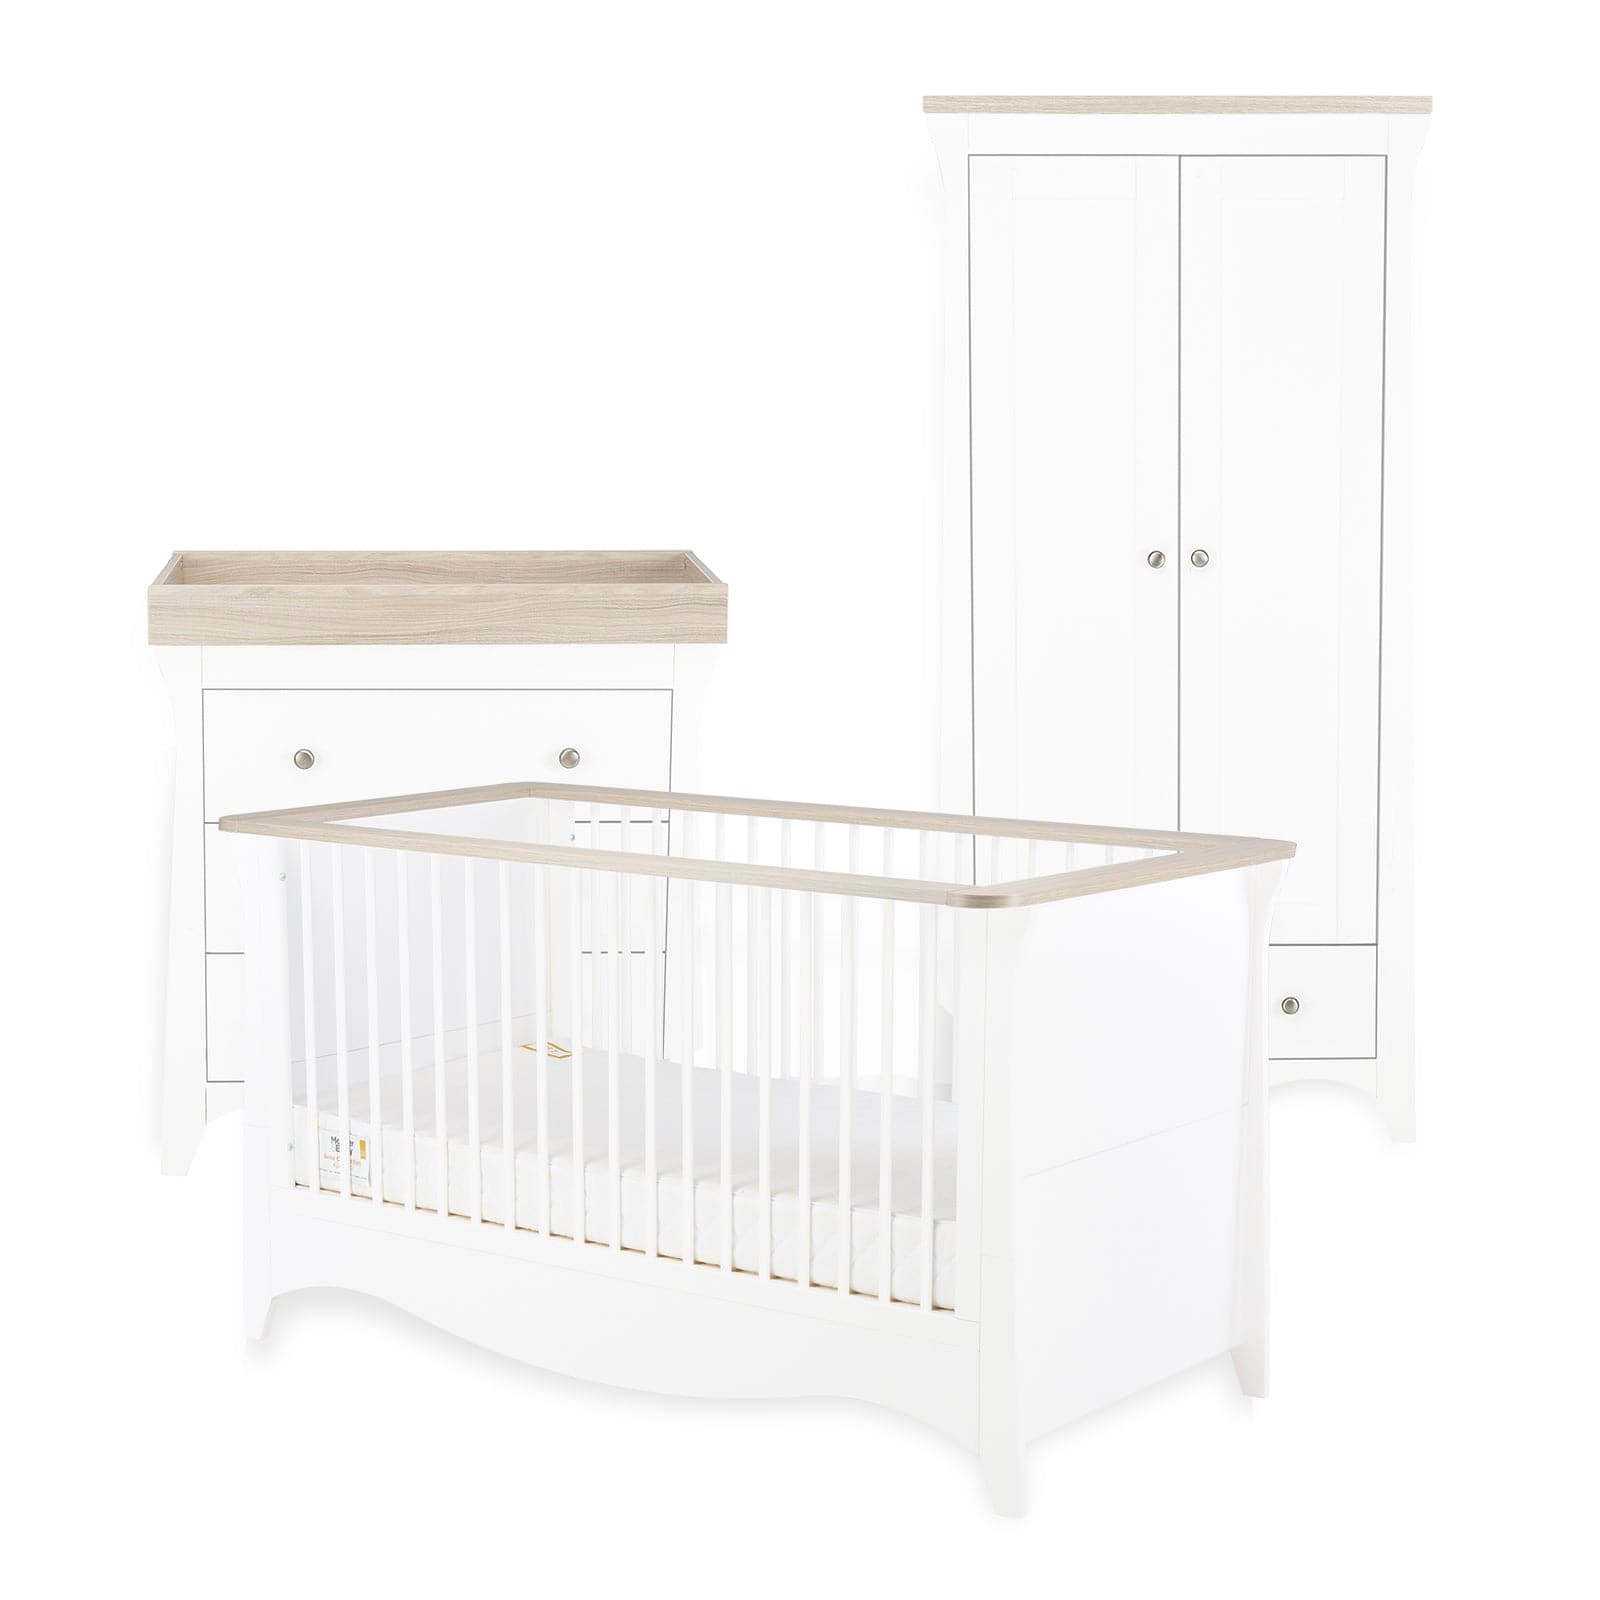 Cuddleco Clara 3 Piece Nursery Furniture Set (Cot Bed, Wardrobe & Dresser) - White & Ash -  | For Your Little One